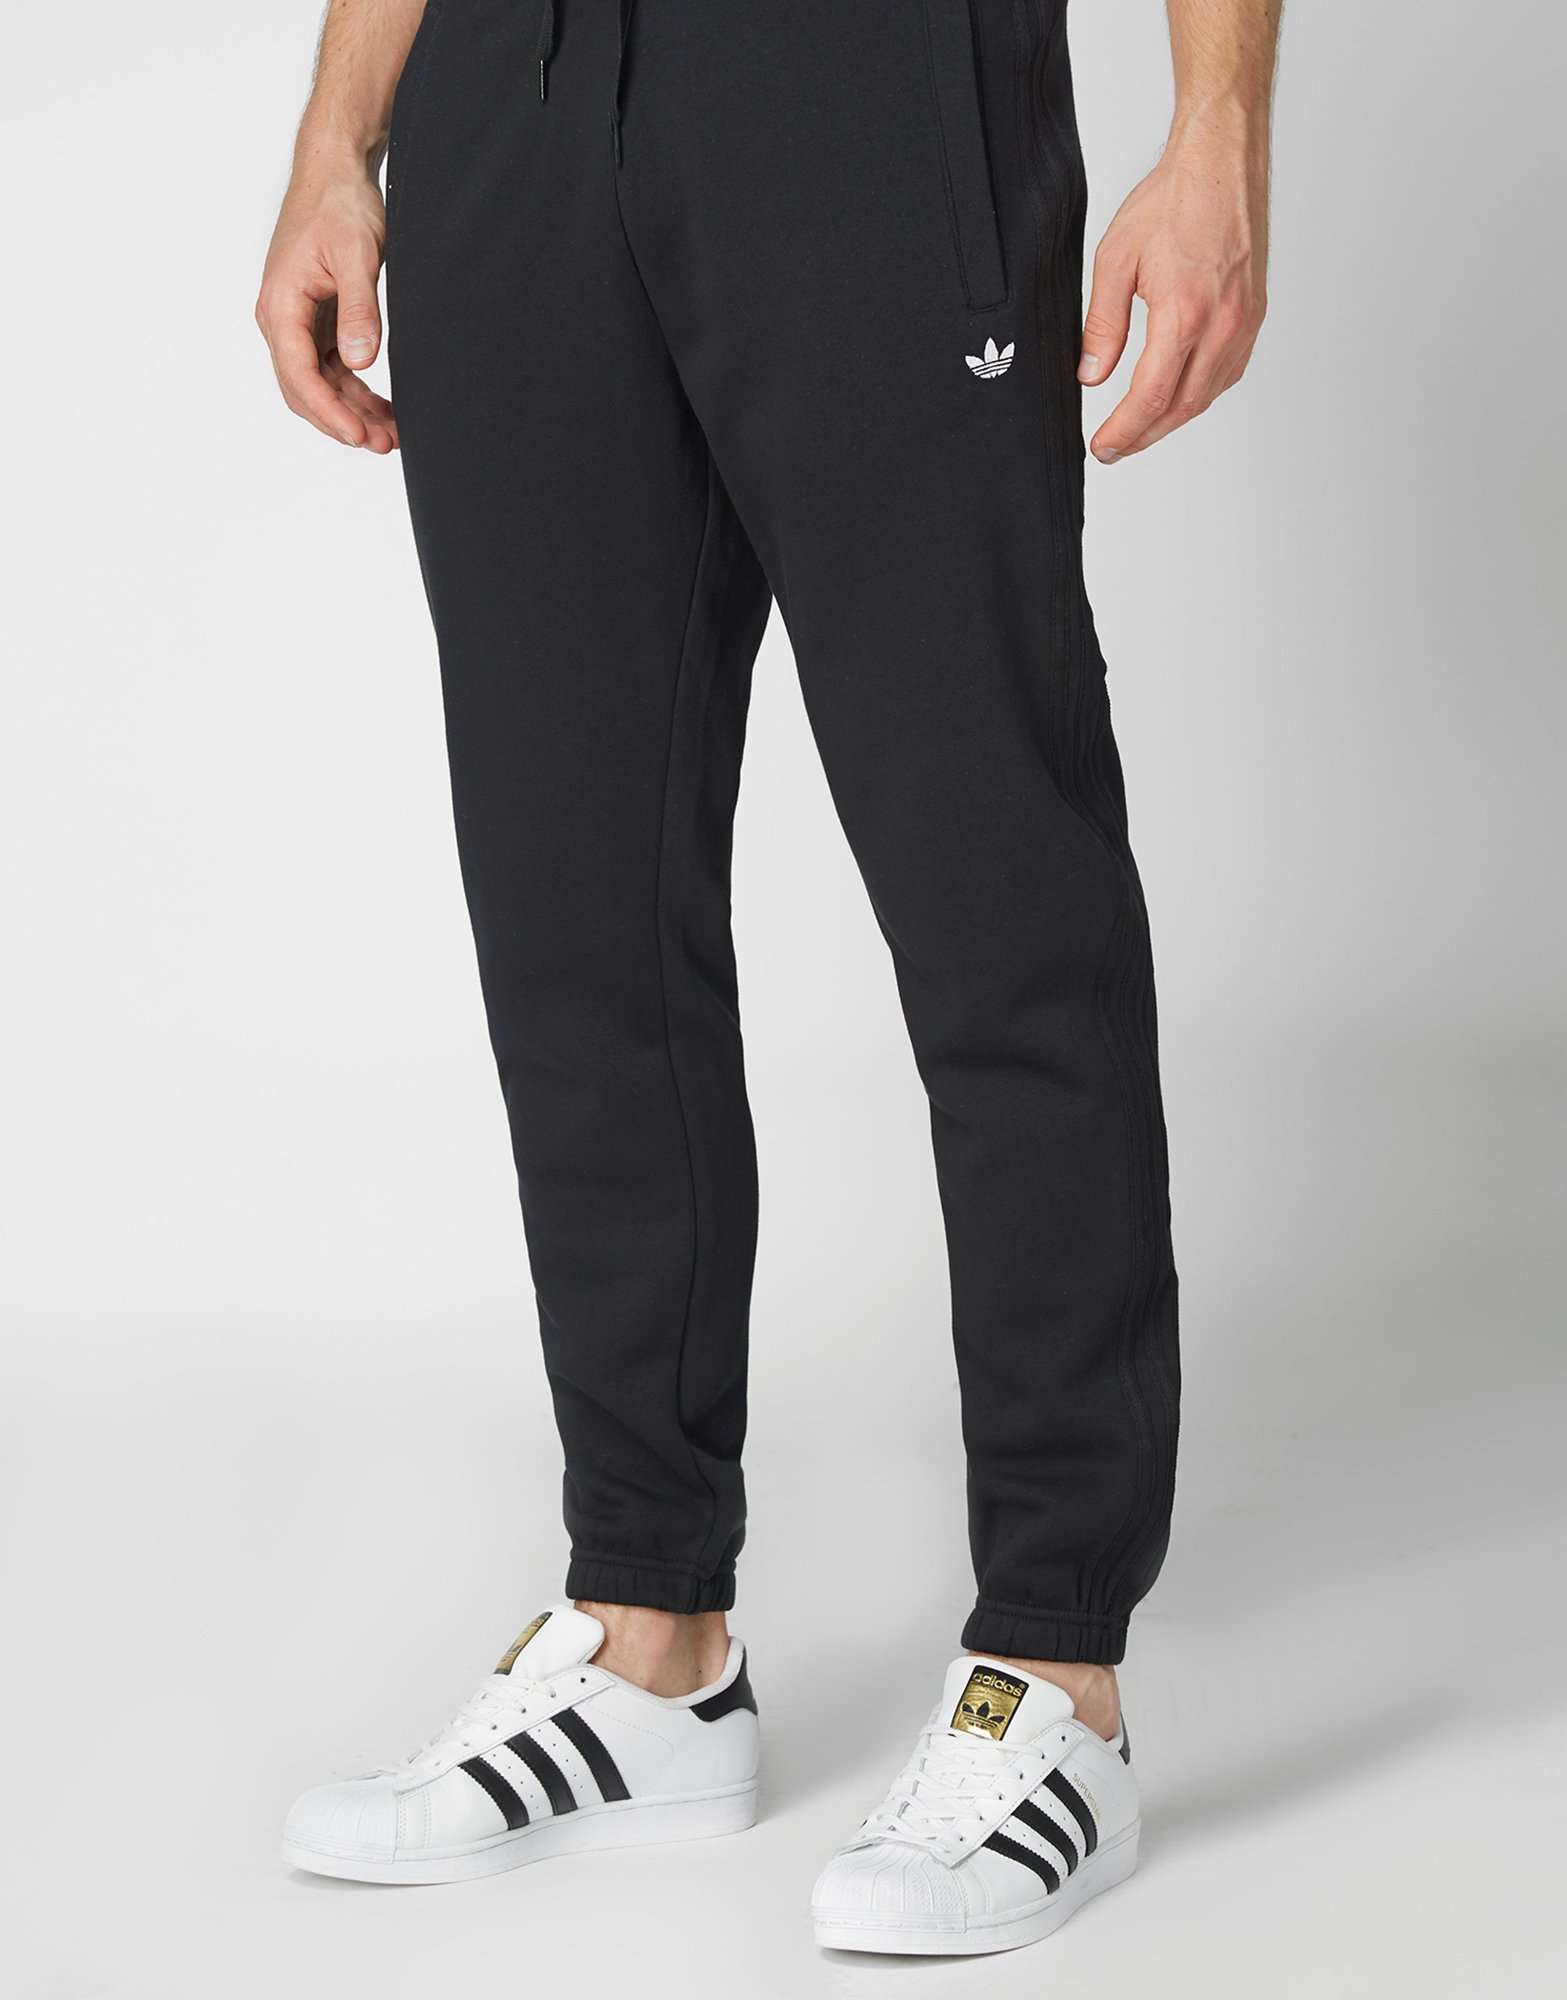 adidas Originals Sport Cuff Fleece Pants | scotts Menswear